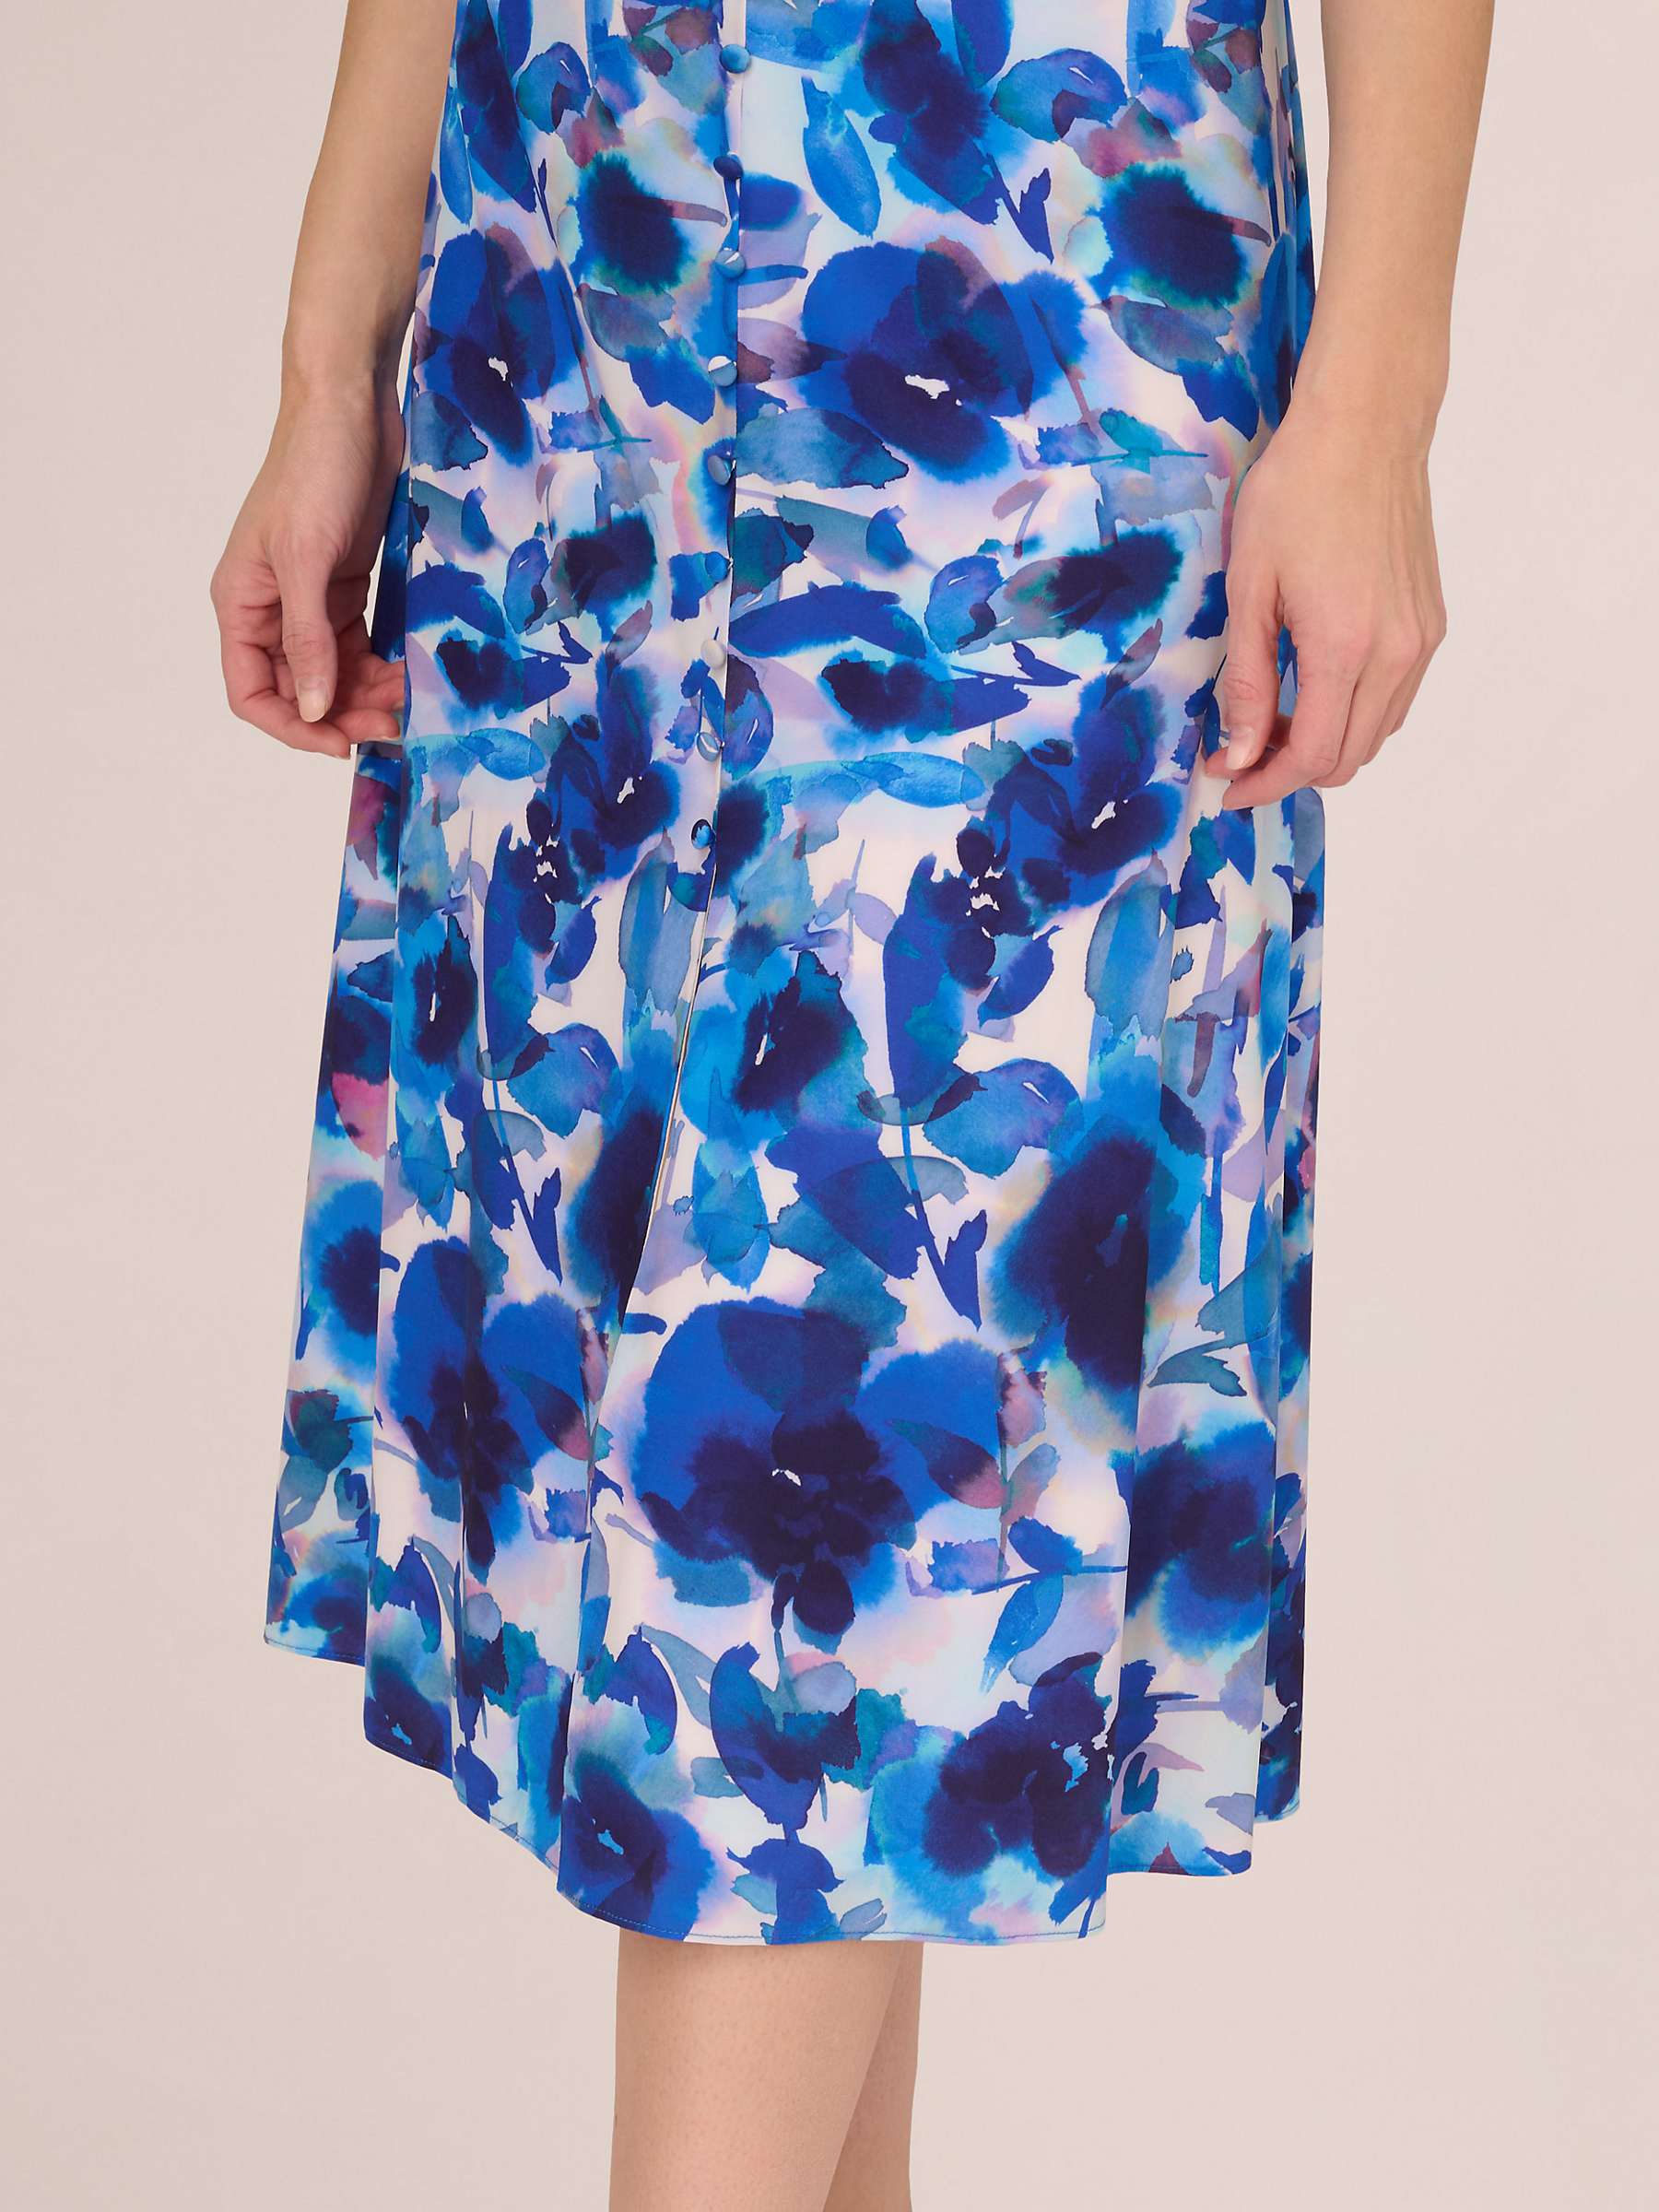 Buy Adrianna Papell Floral Midi Chiffon Dress, Blue/Multi Online at johnlewis.com